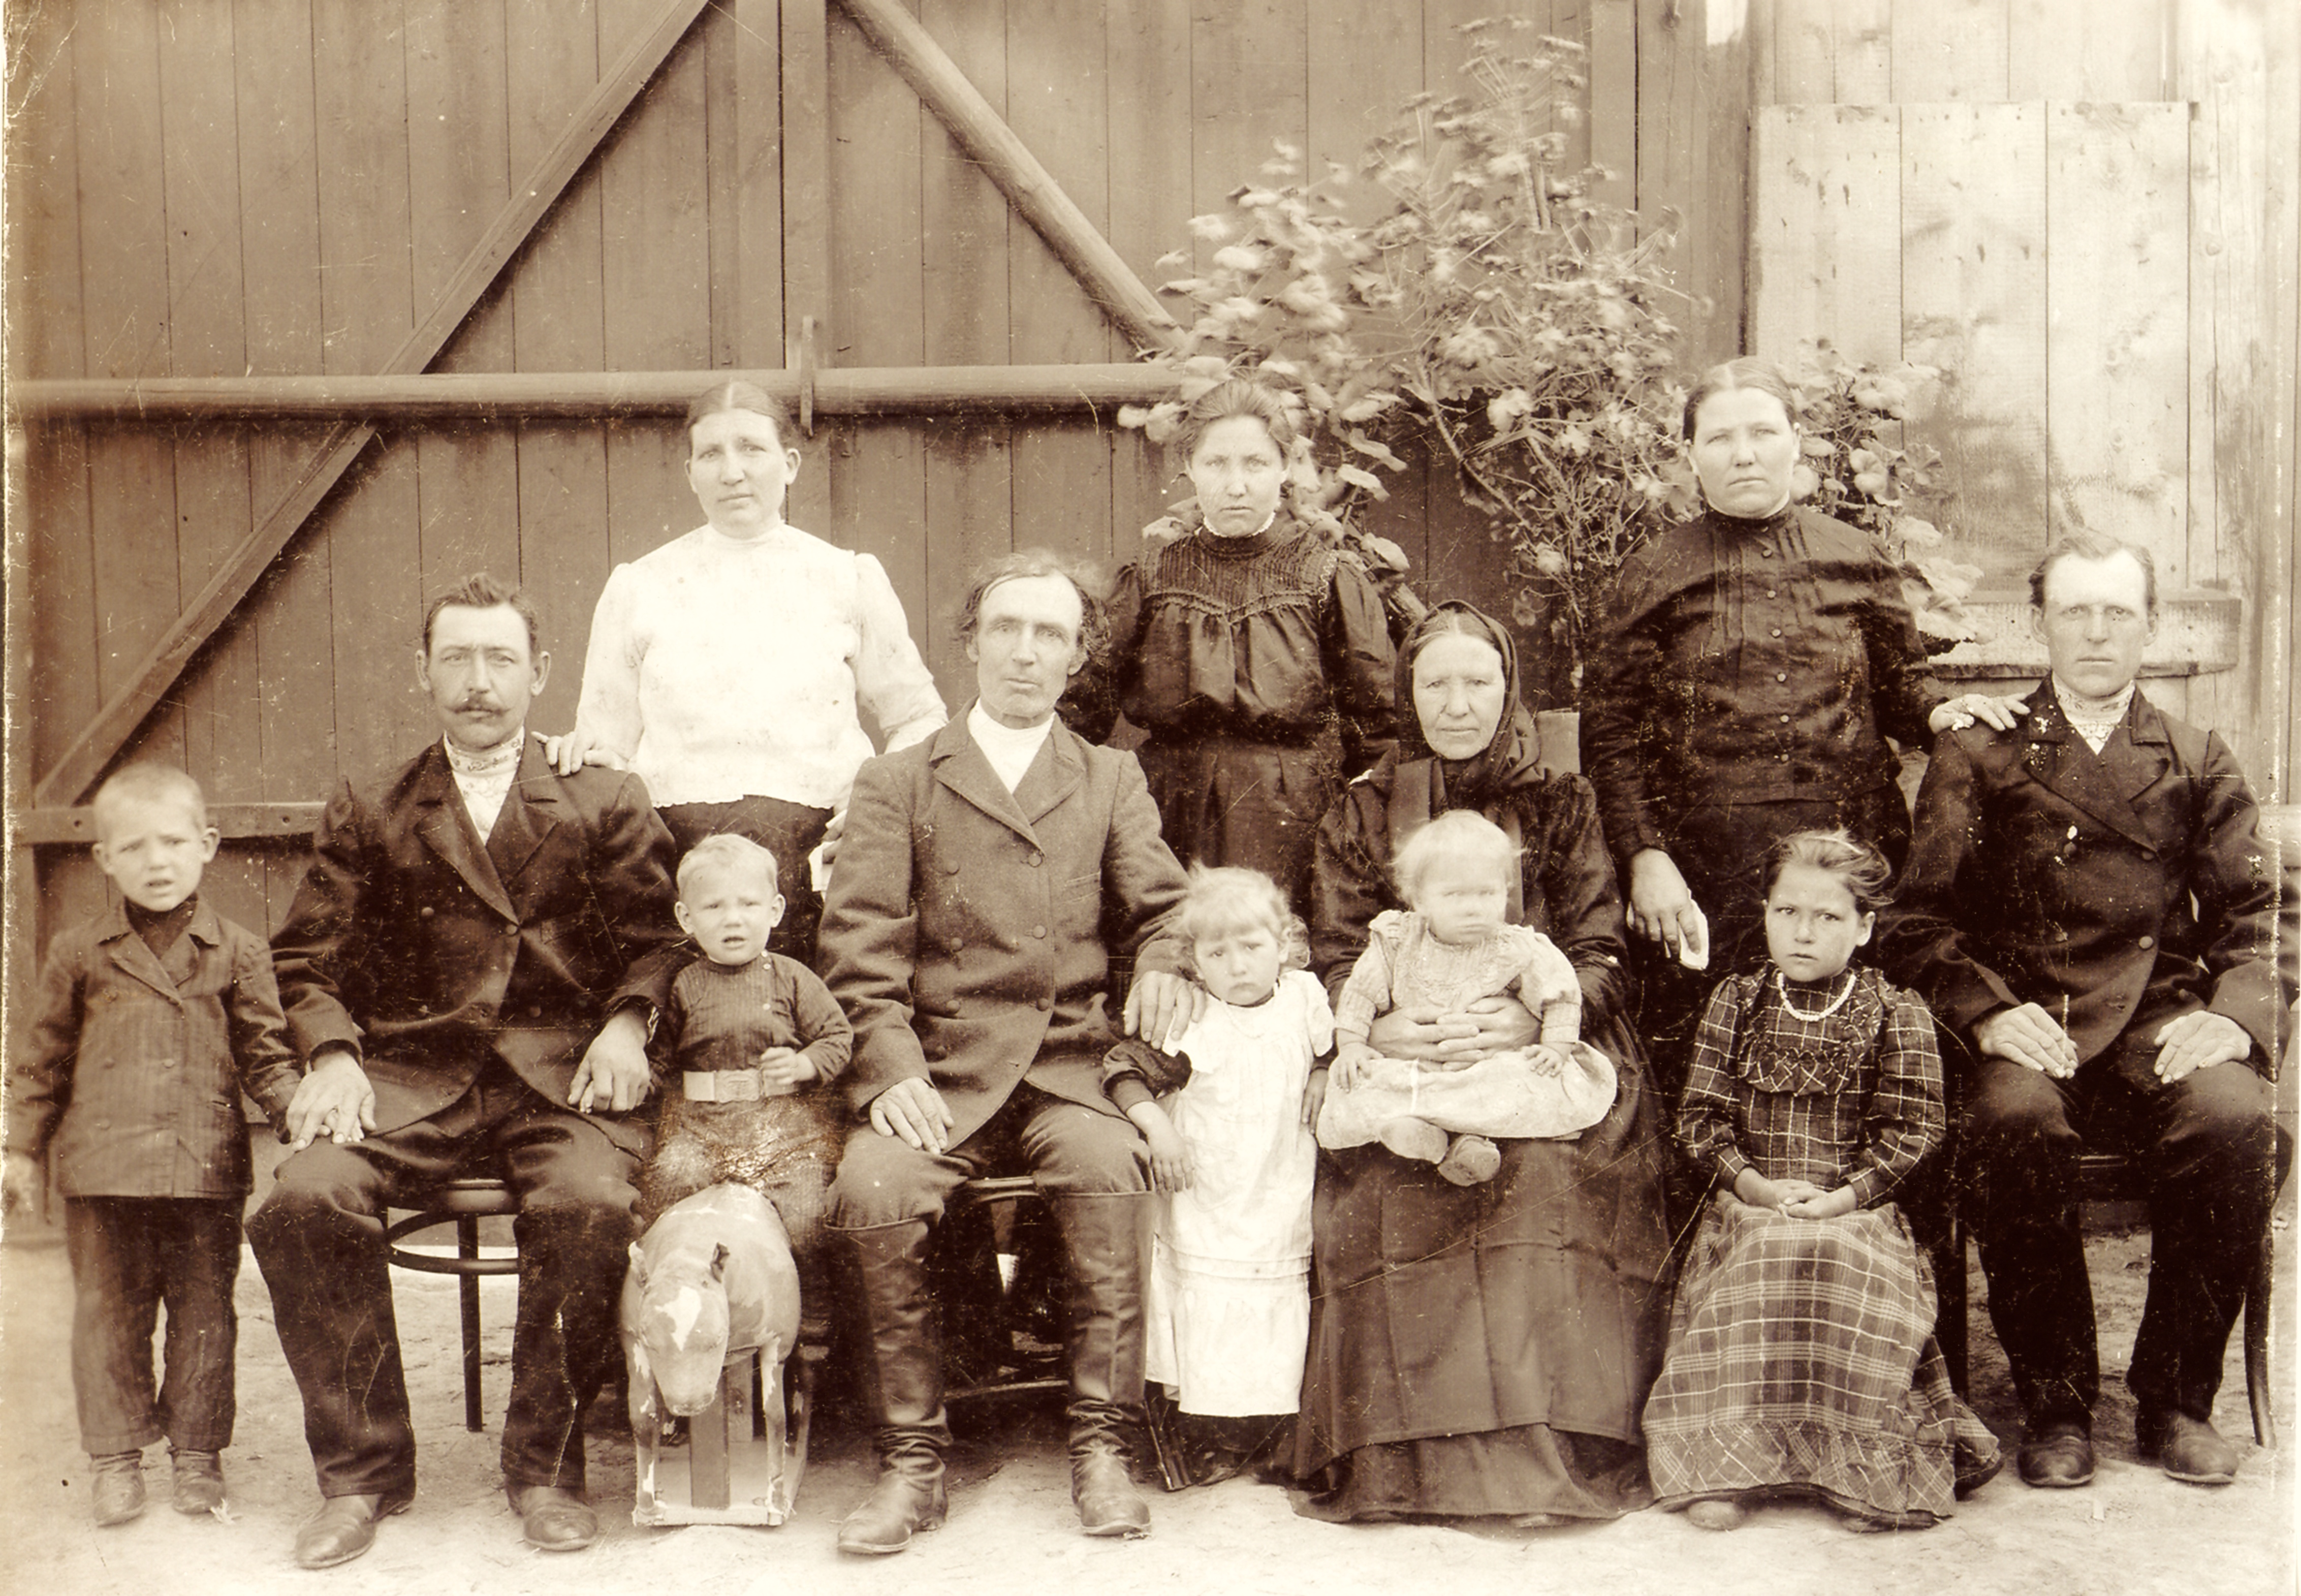 Johann family in Gnadenfeld in 1912